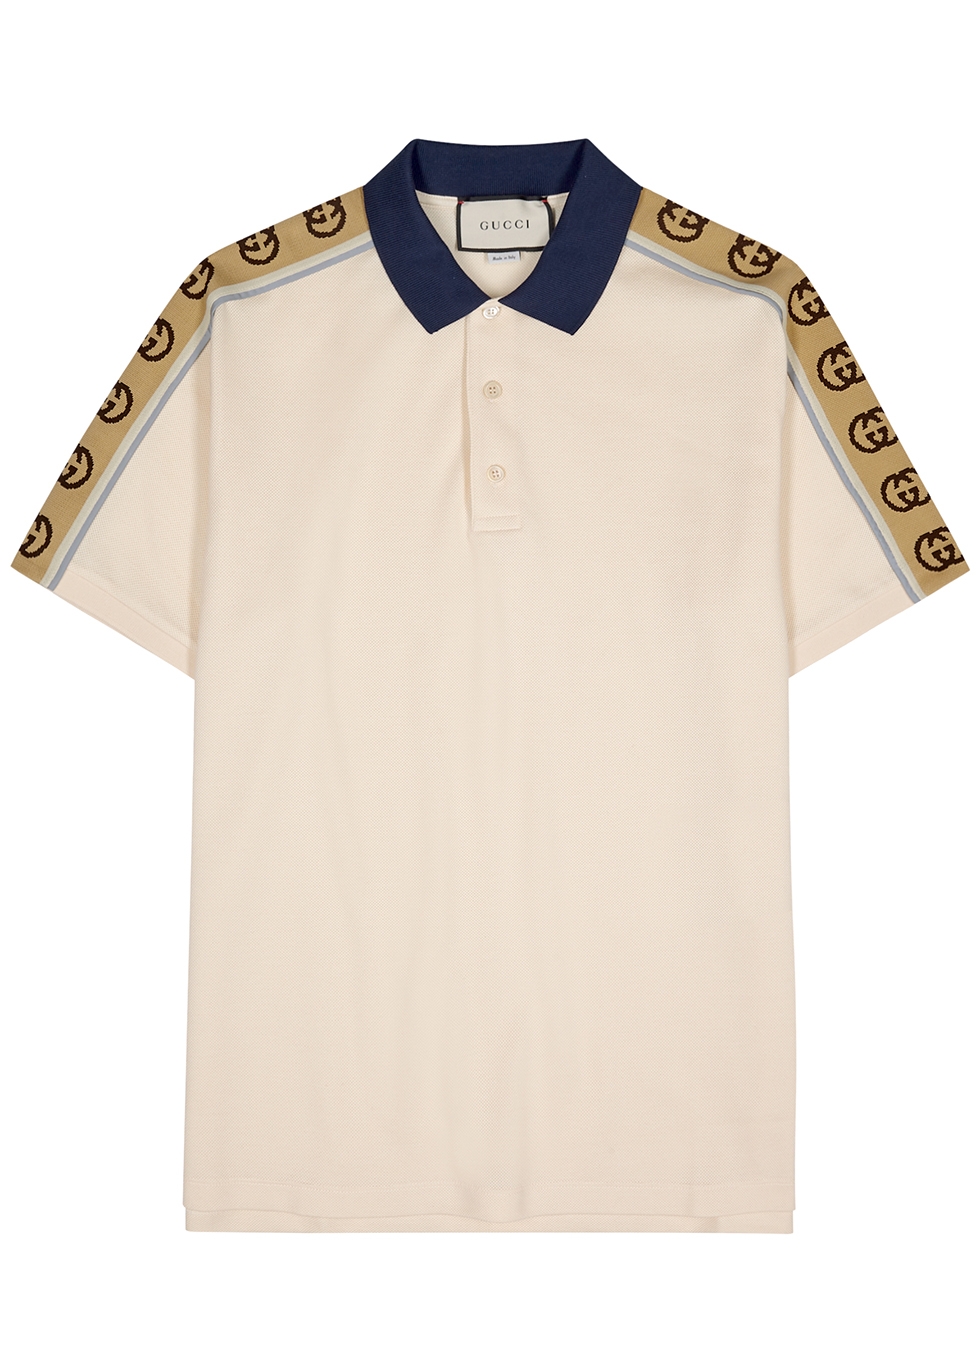 Gucci Men's Polo Shirts - Harvey Nichols